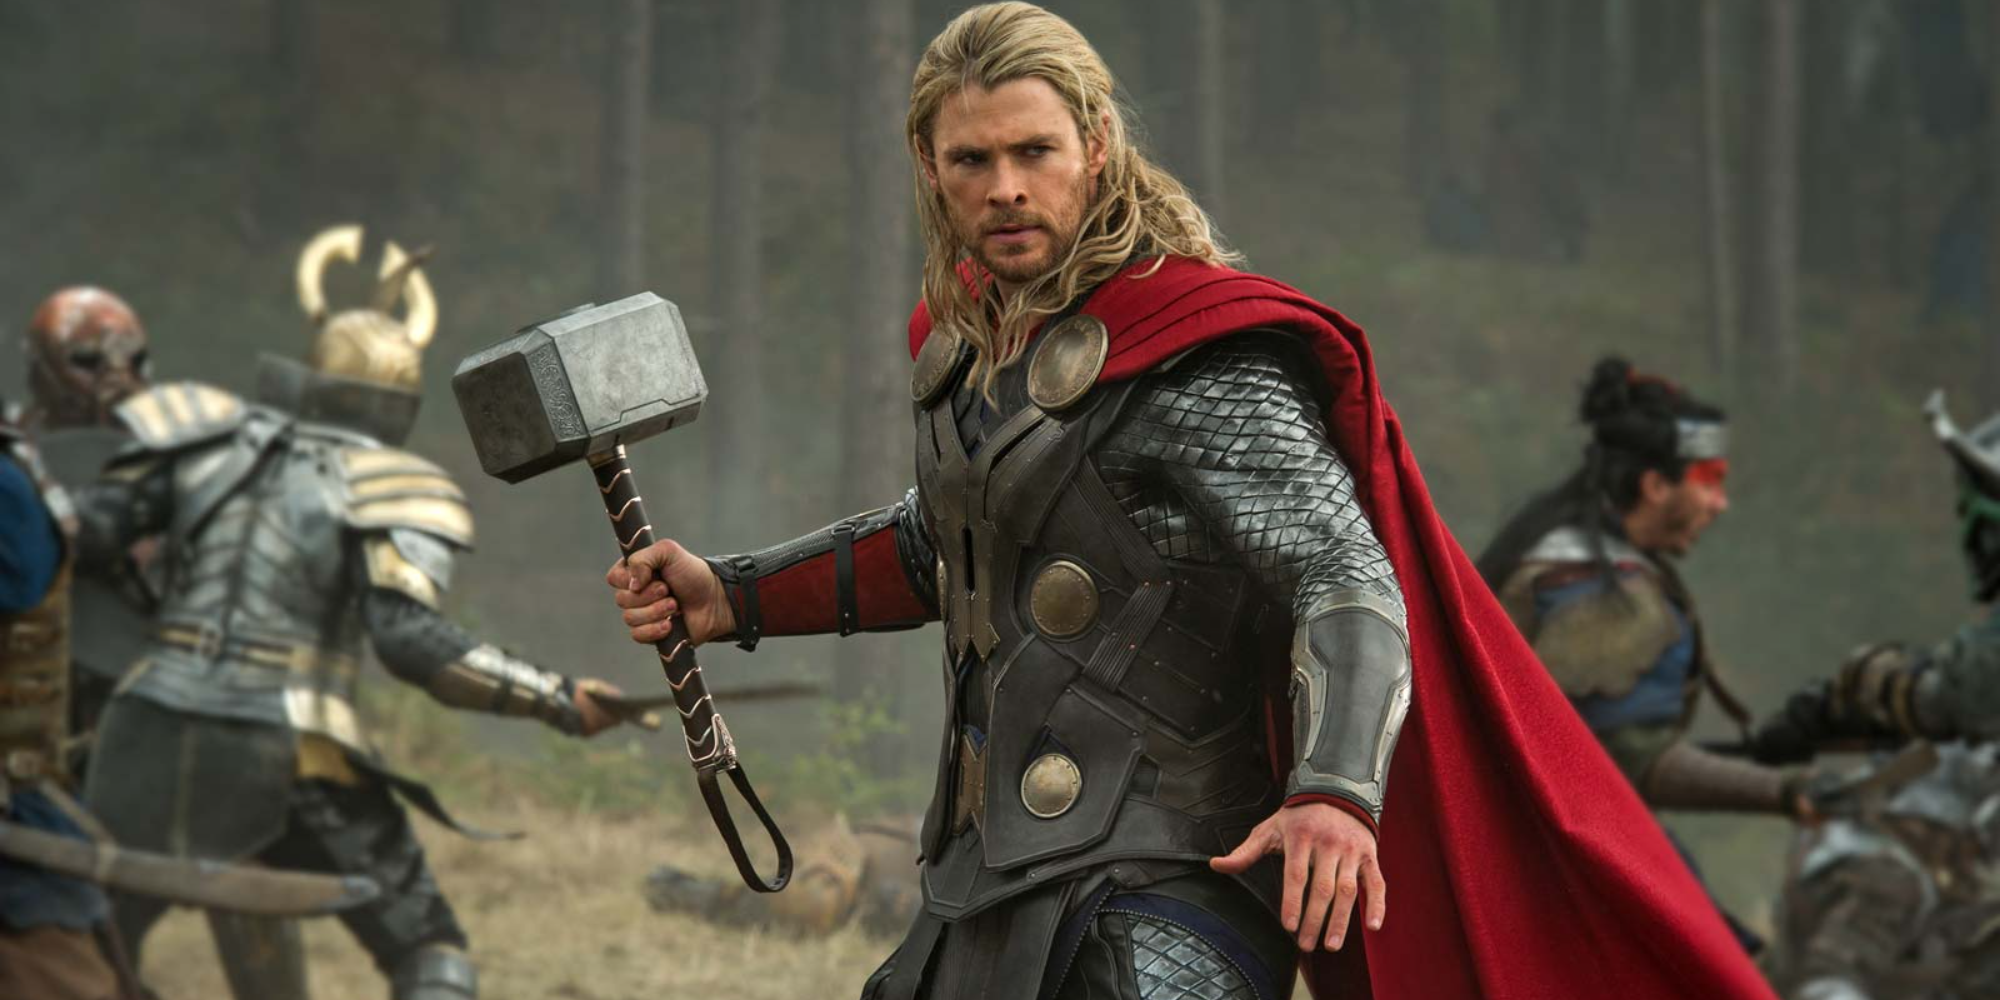 Chris-Hemsworth-Thor-Thor-The-Dark-World battling against enemies 